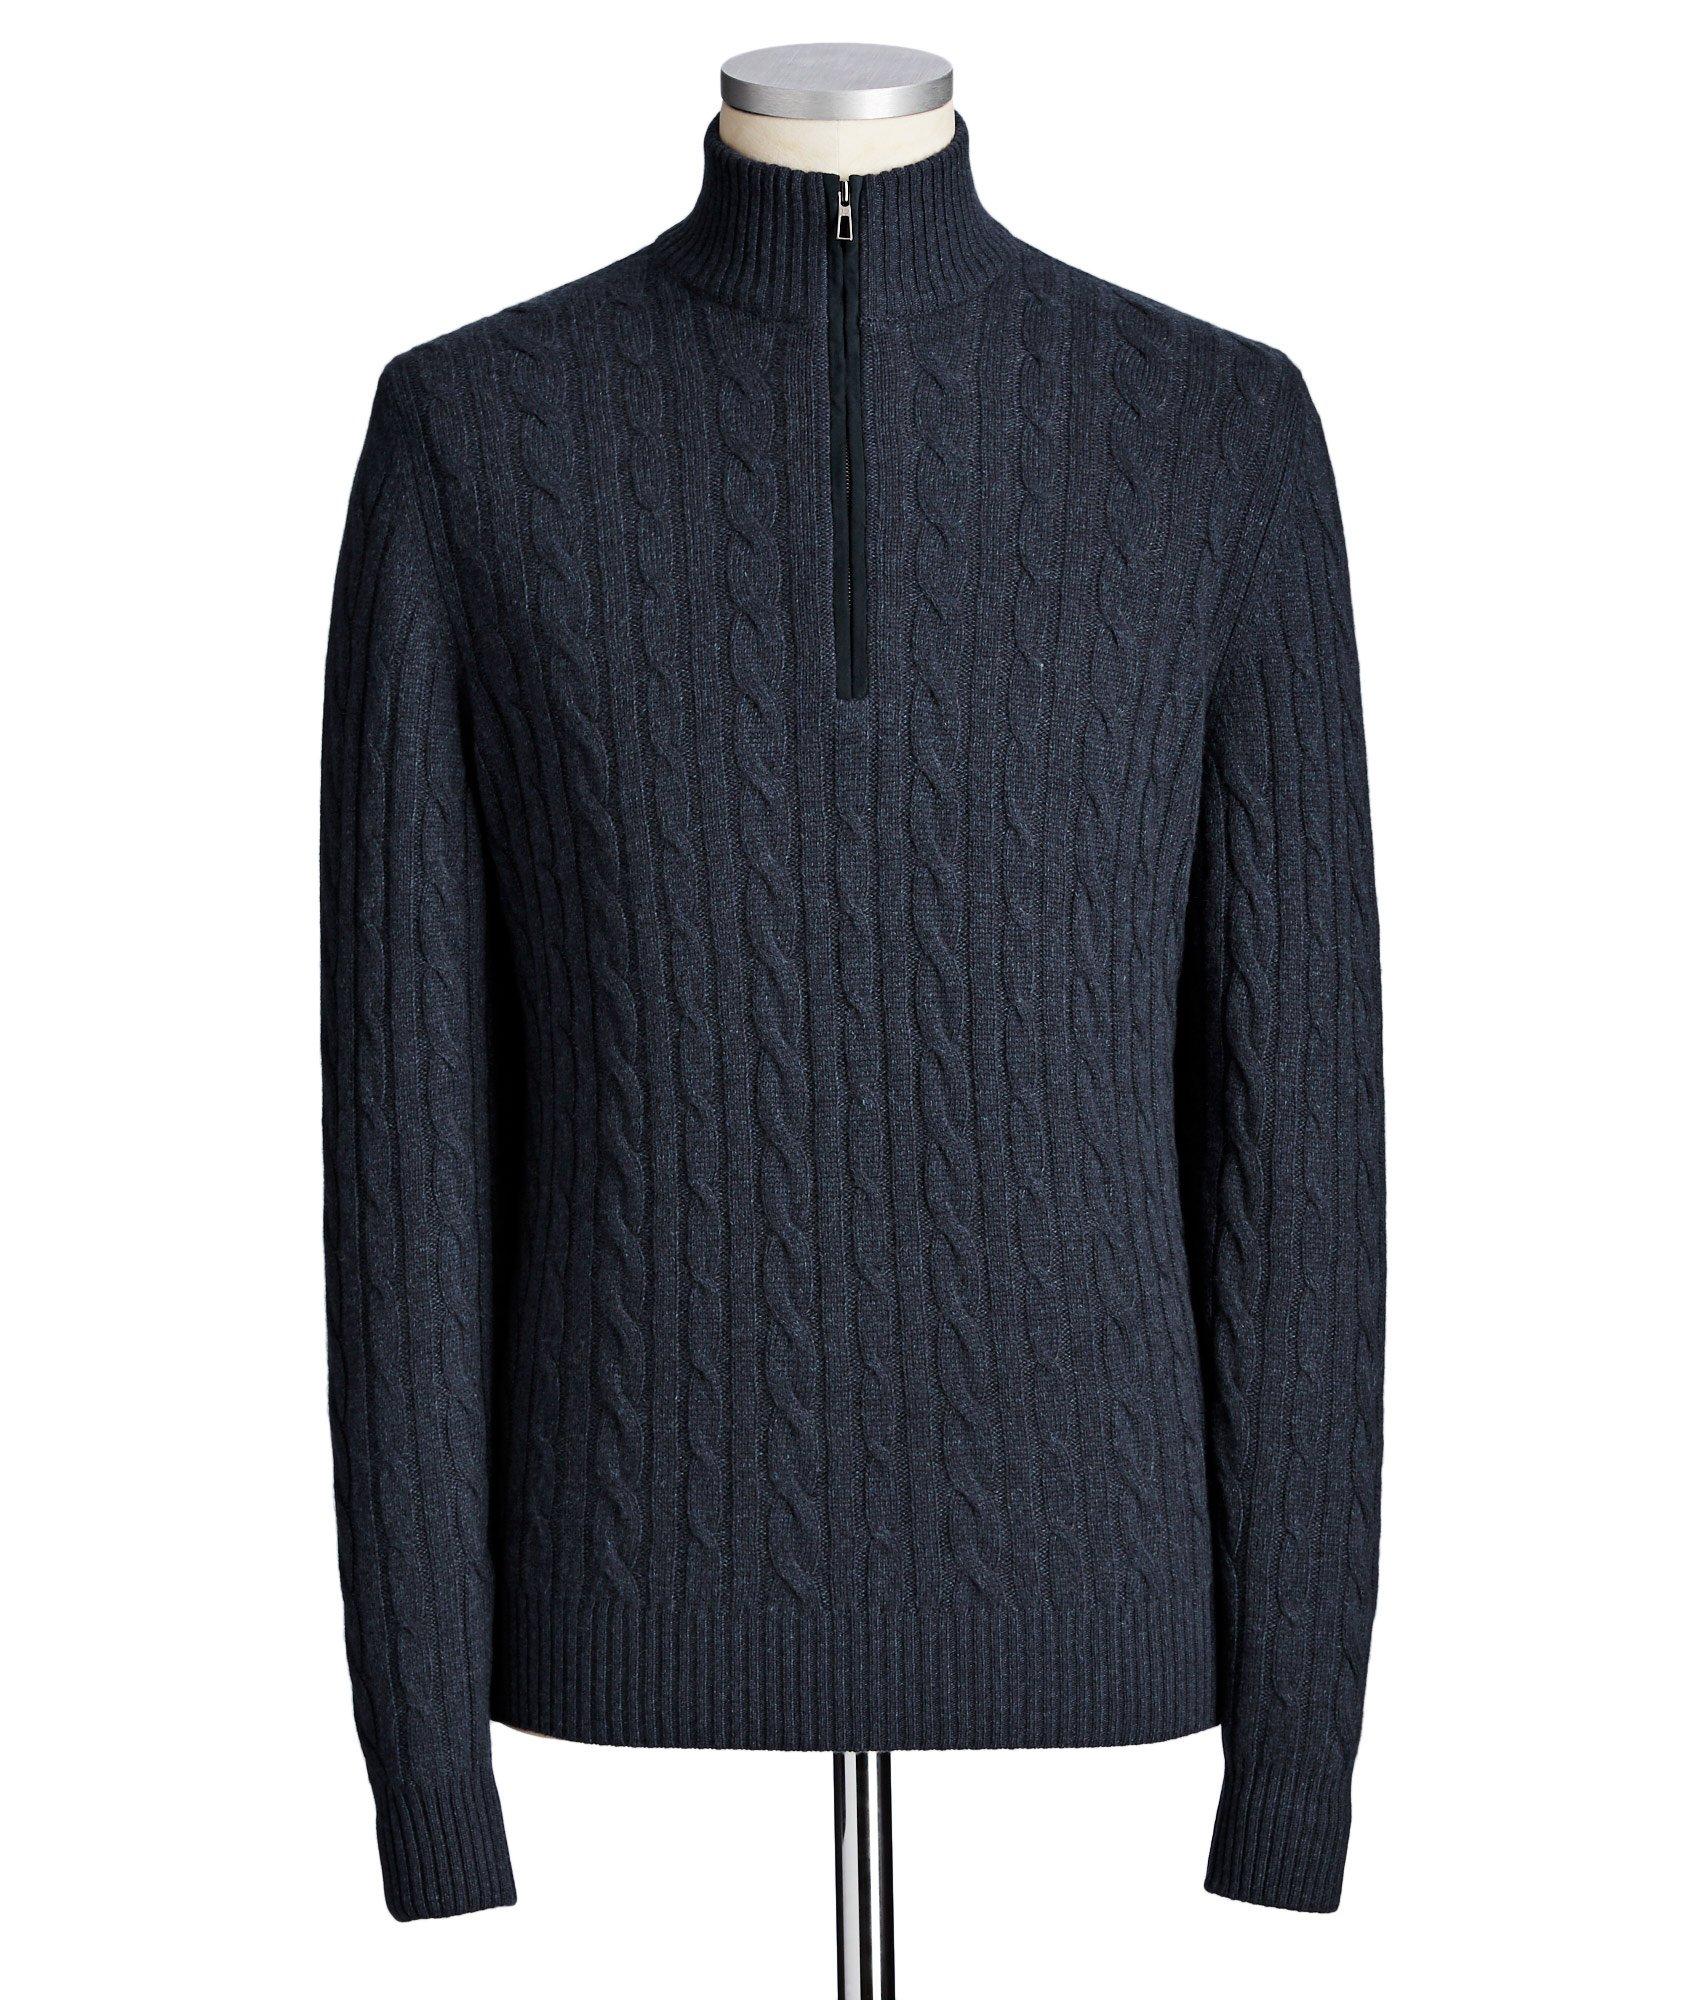 Cashmere Half-Zip Sweater image 0